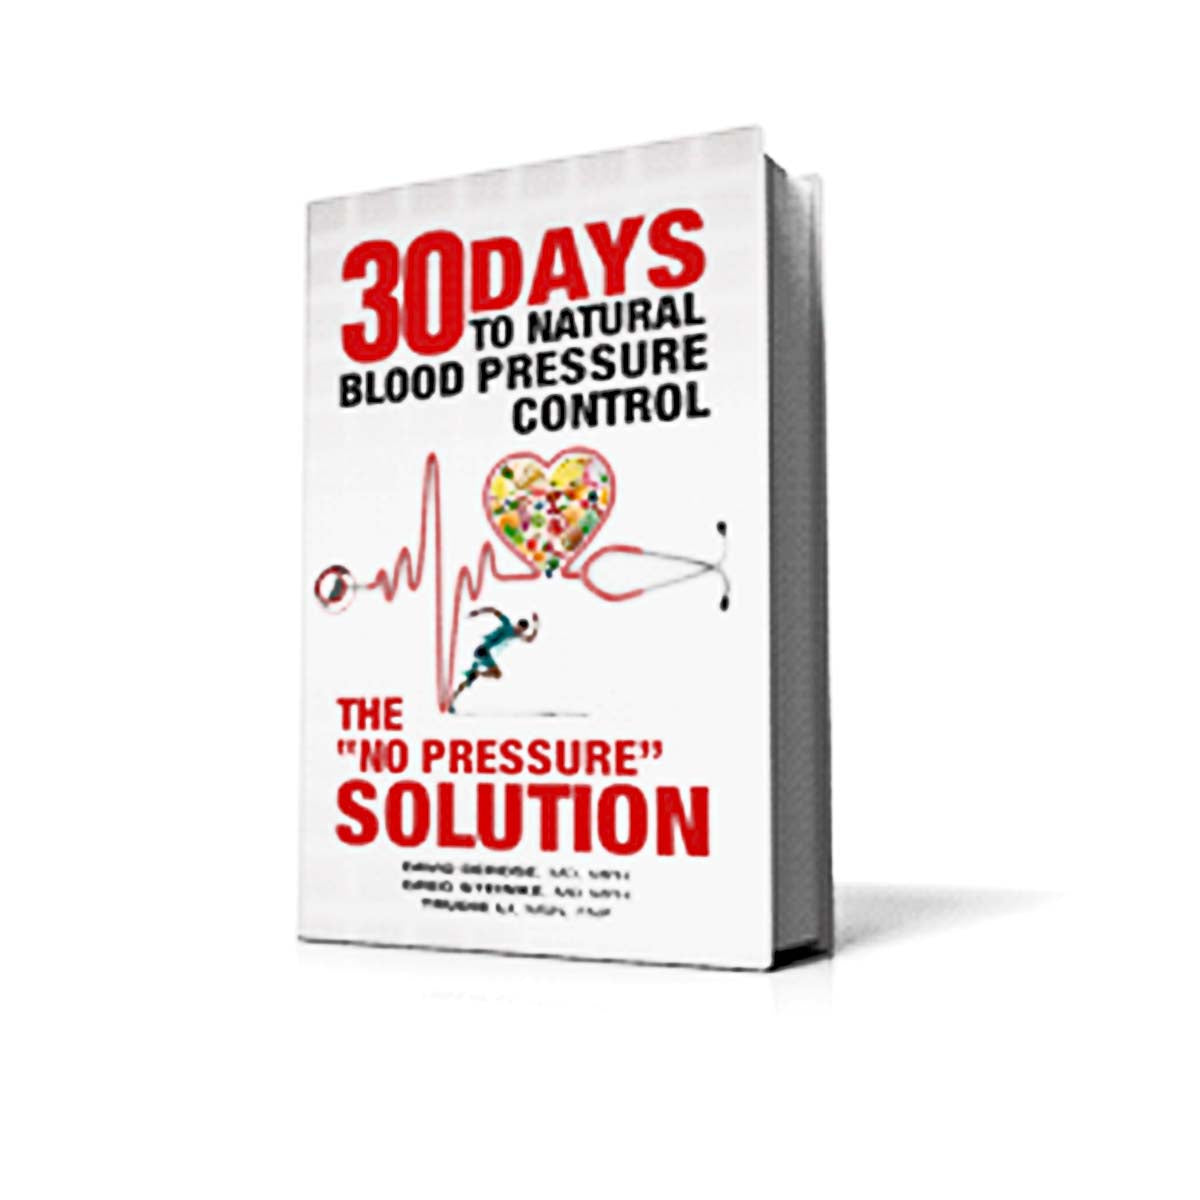 30 Days to Natural Blood Pressure Control by David DeRose